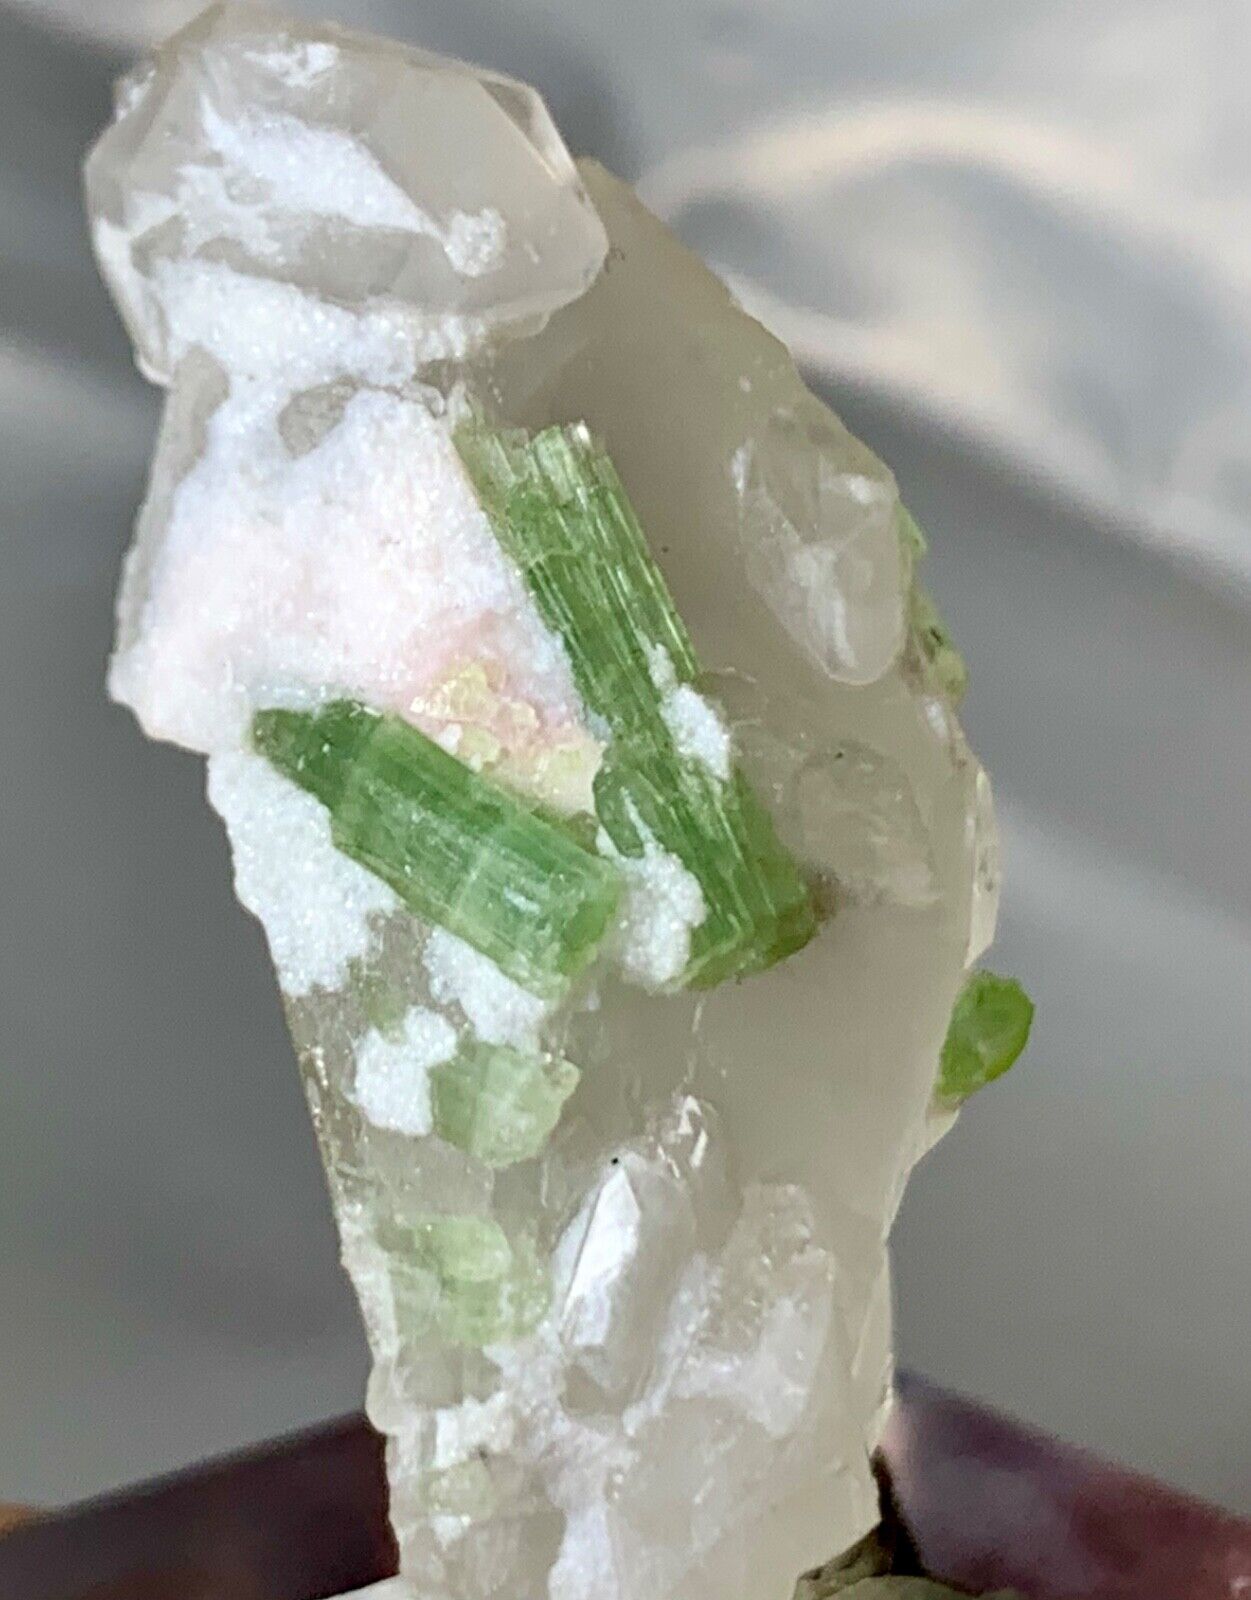 123 carat tourmaline crystal on quartz specimen from Afghanistan